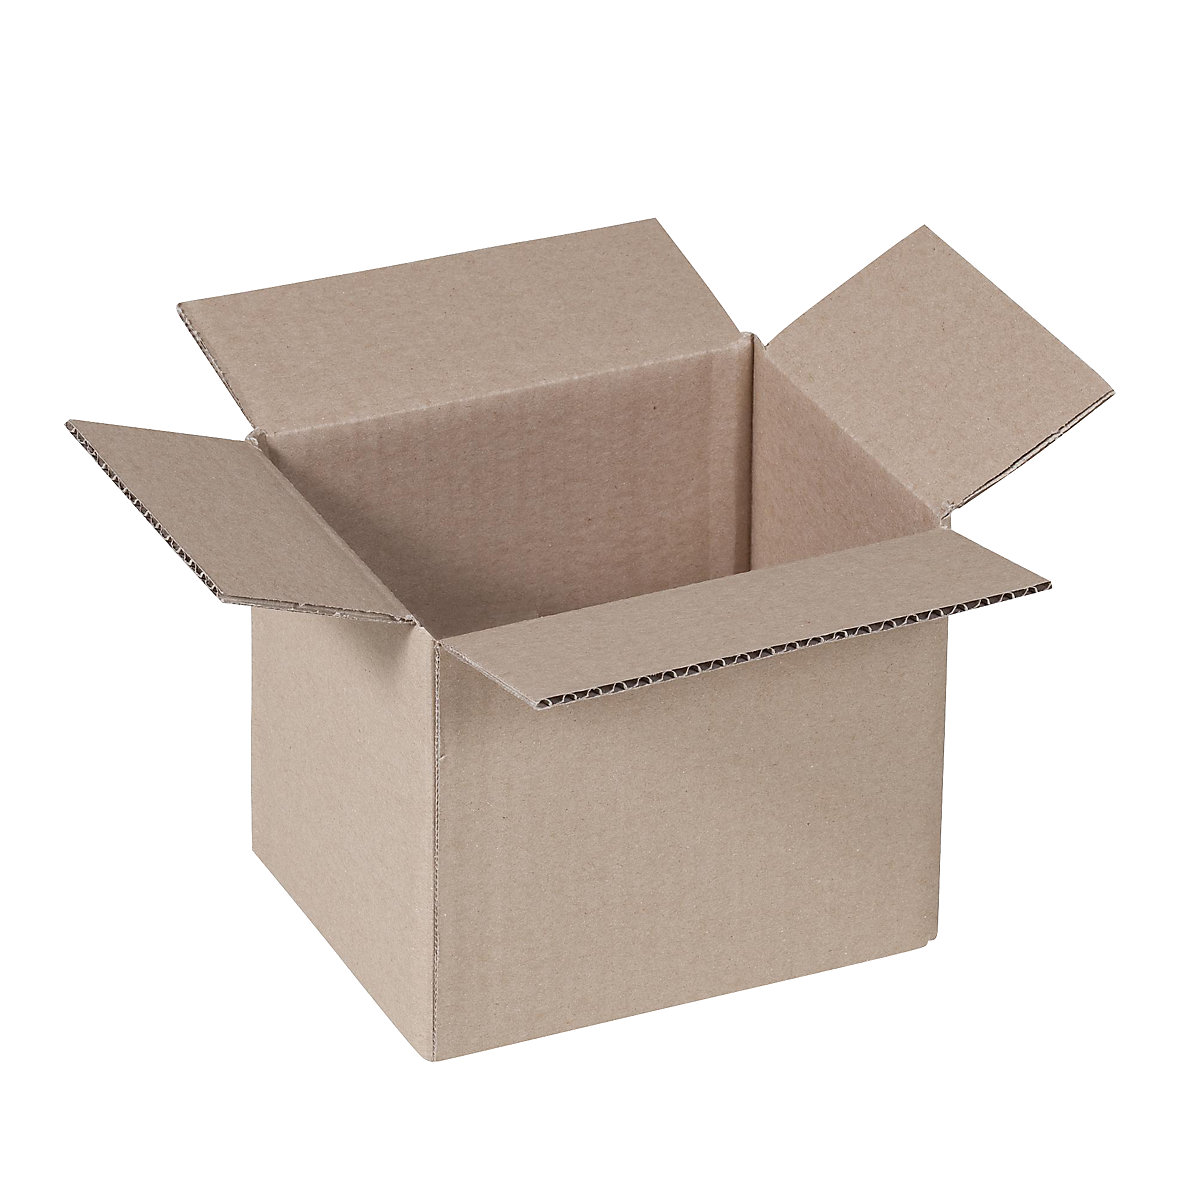 Folding cardboard box, FEFCO 0201, made of single fluted cardboard, internal dimensions 160 x 110 x 130 mm, pack of 50-14